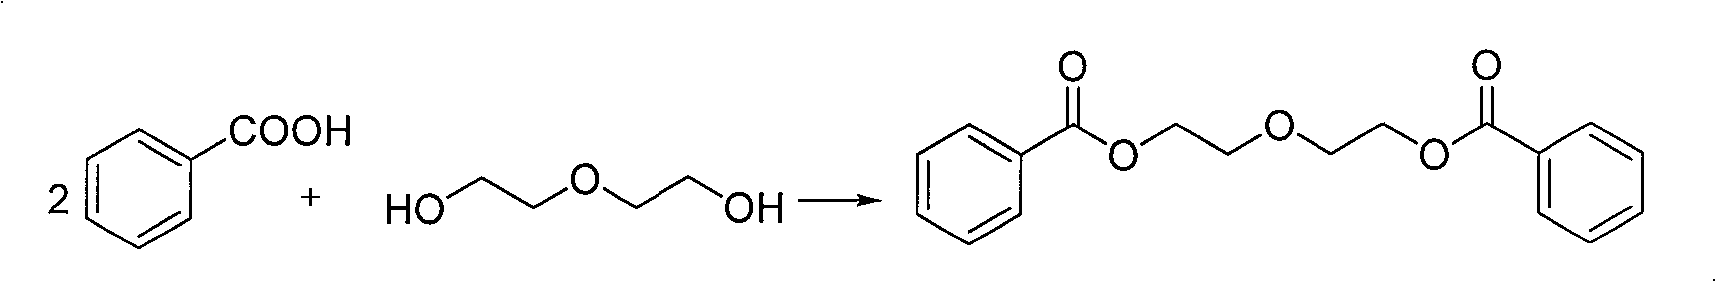 Preparation method of diethylene glycol dibenzoate